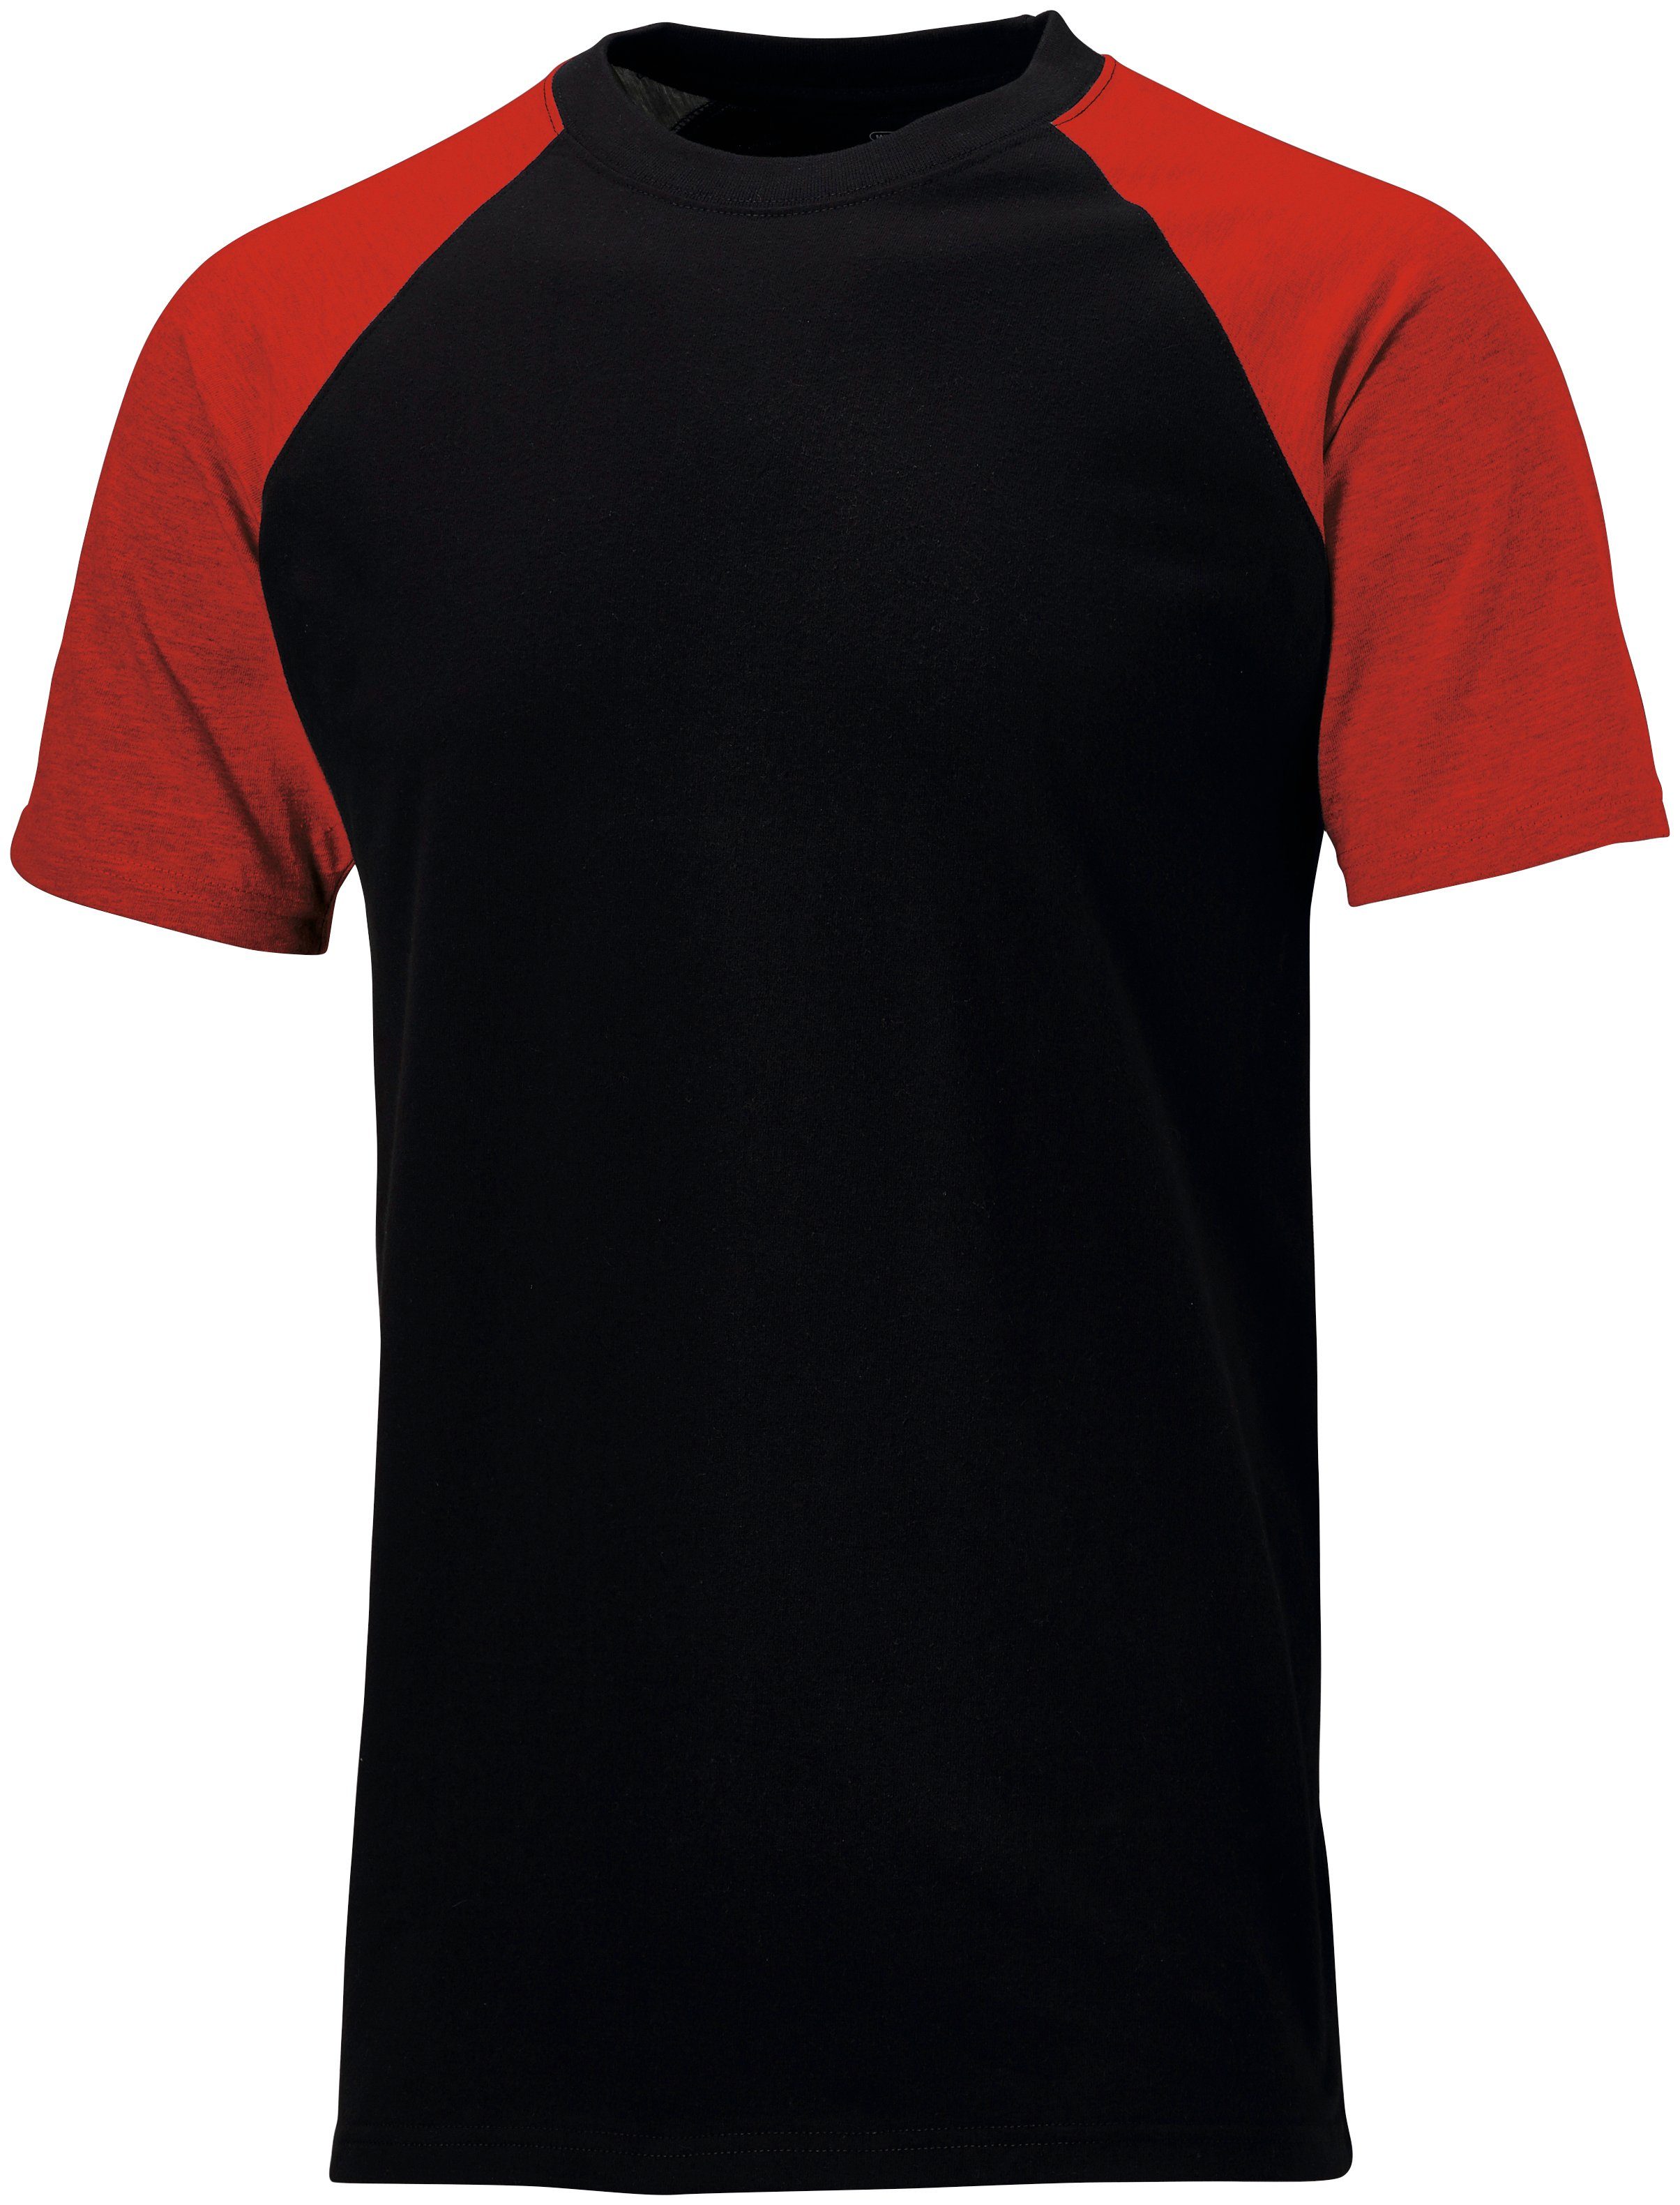 Lücke Dickies T-Shirt S - 3XL Gr. schwarz-rot